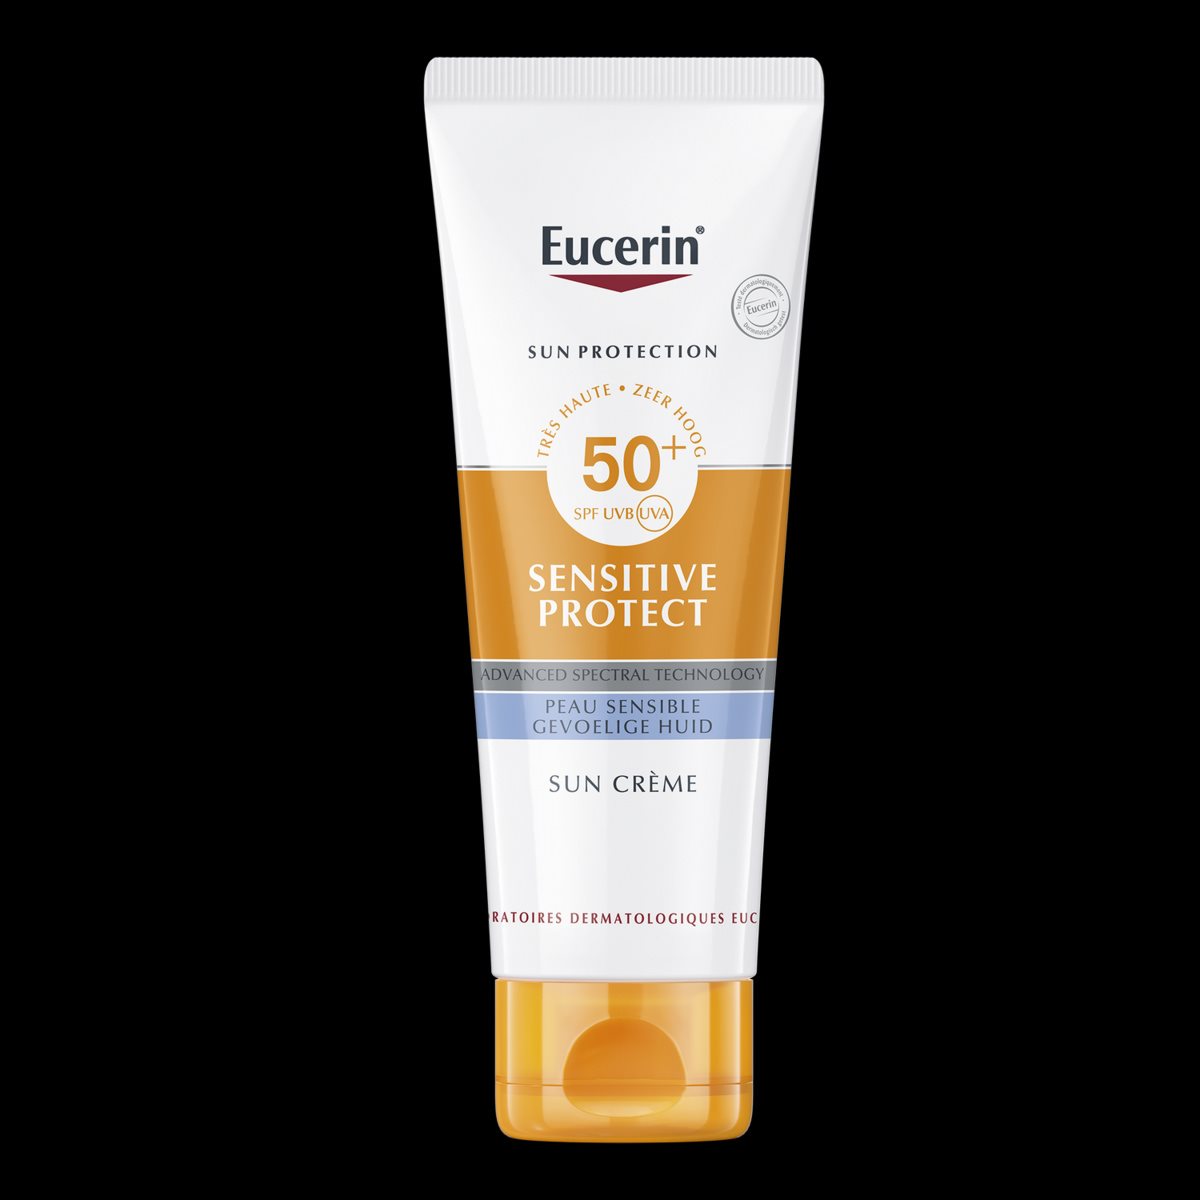 Eucerin SUN PROTECTION SENSITIVE PROTECT Crème SPF 50+ - 50ml